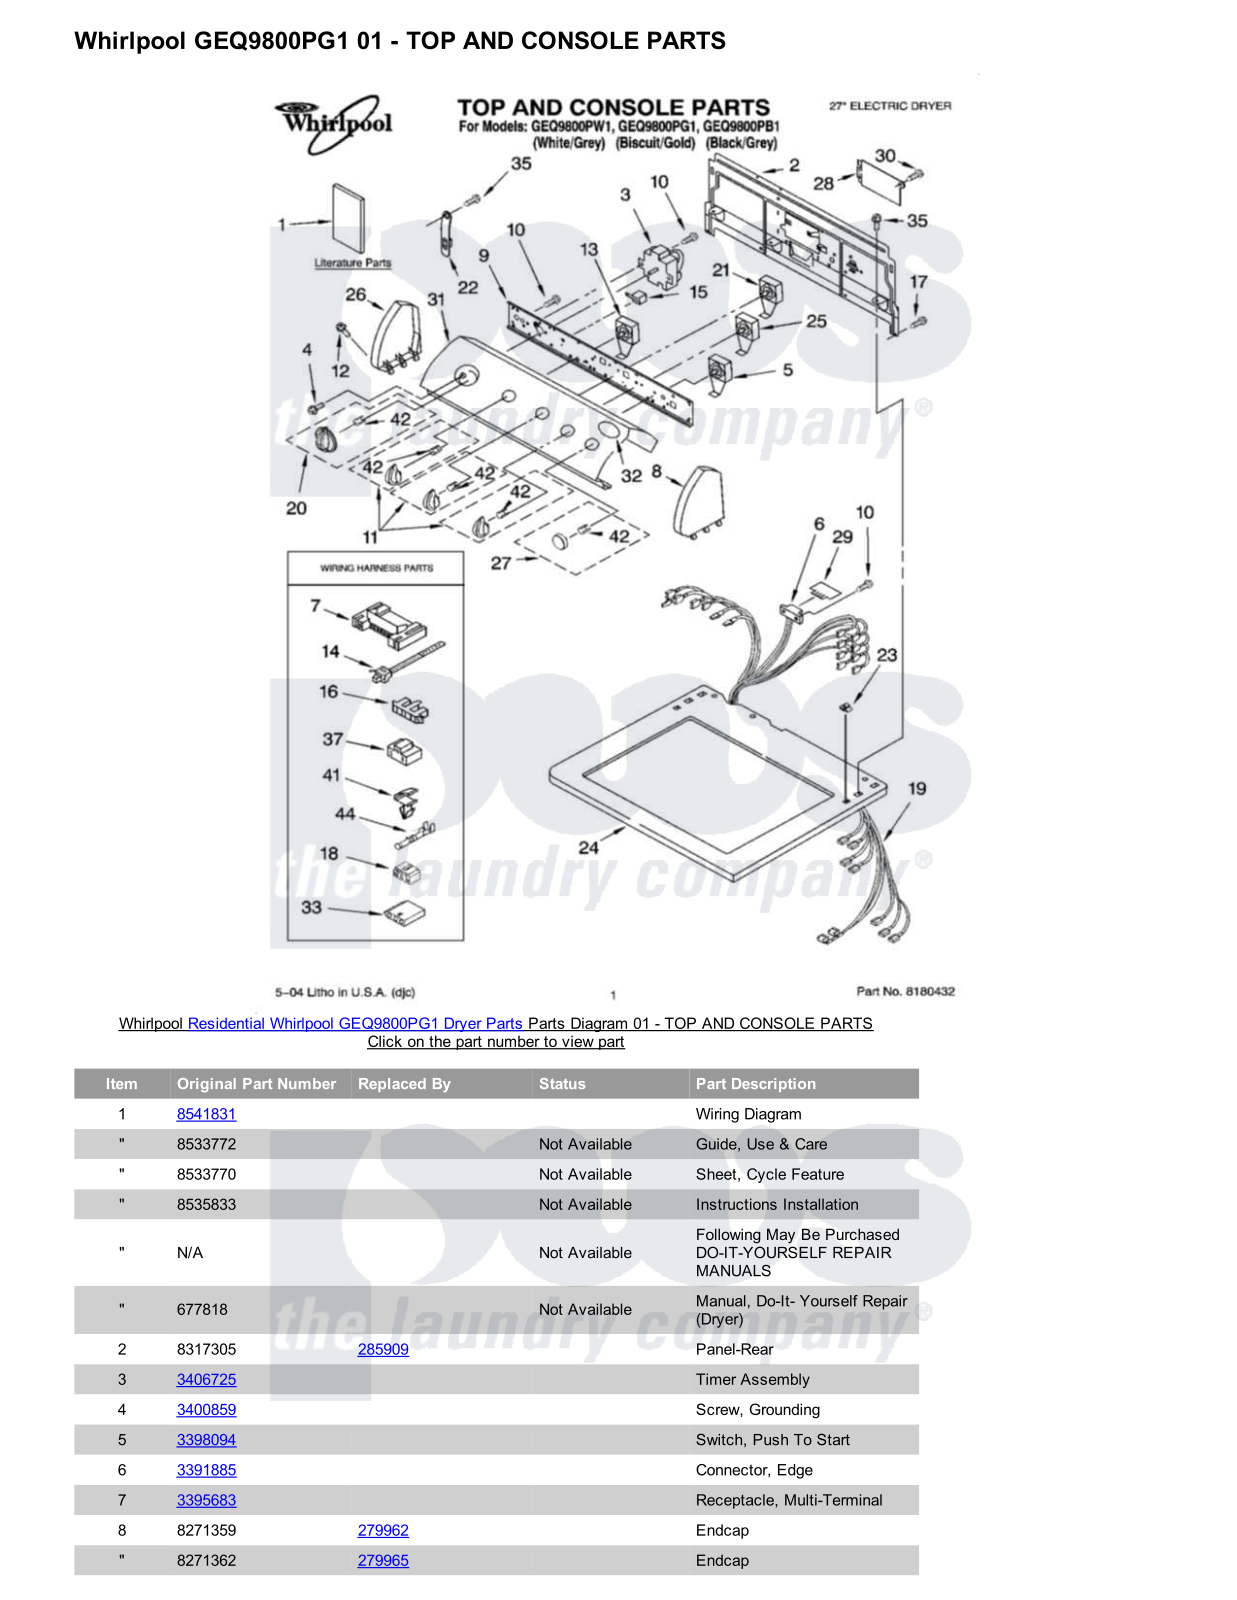 Whirlpool GEQ9800PG1 Parts Diagram